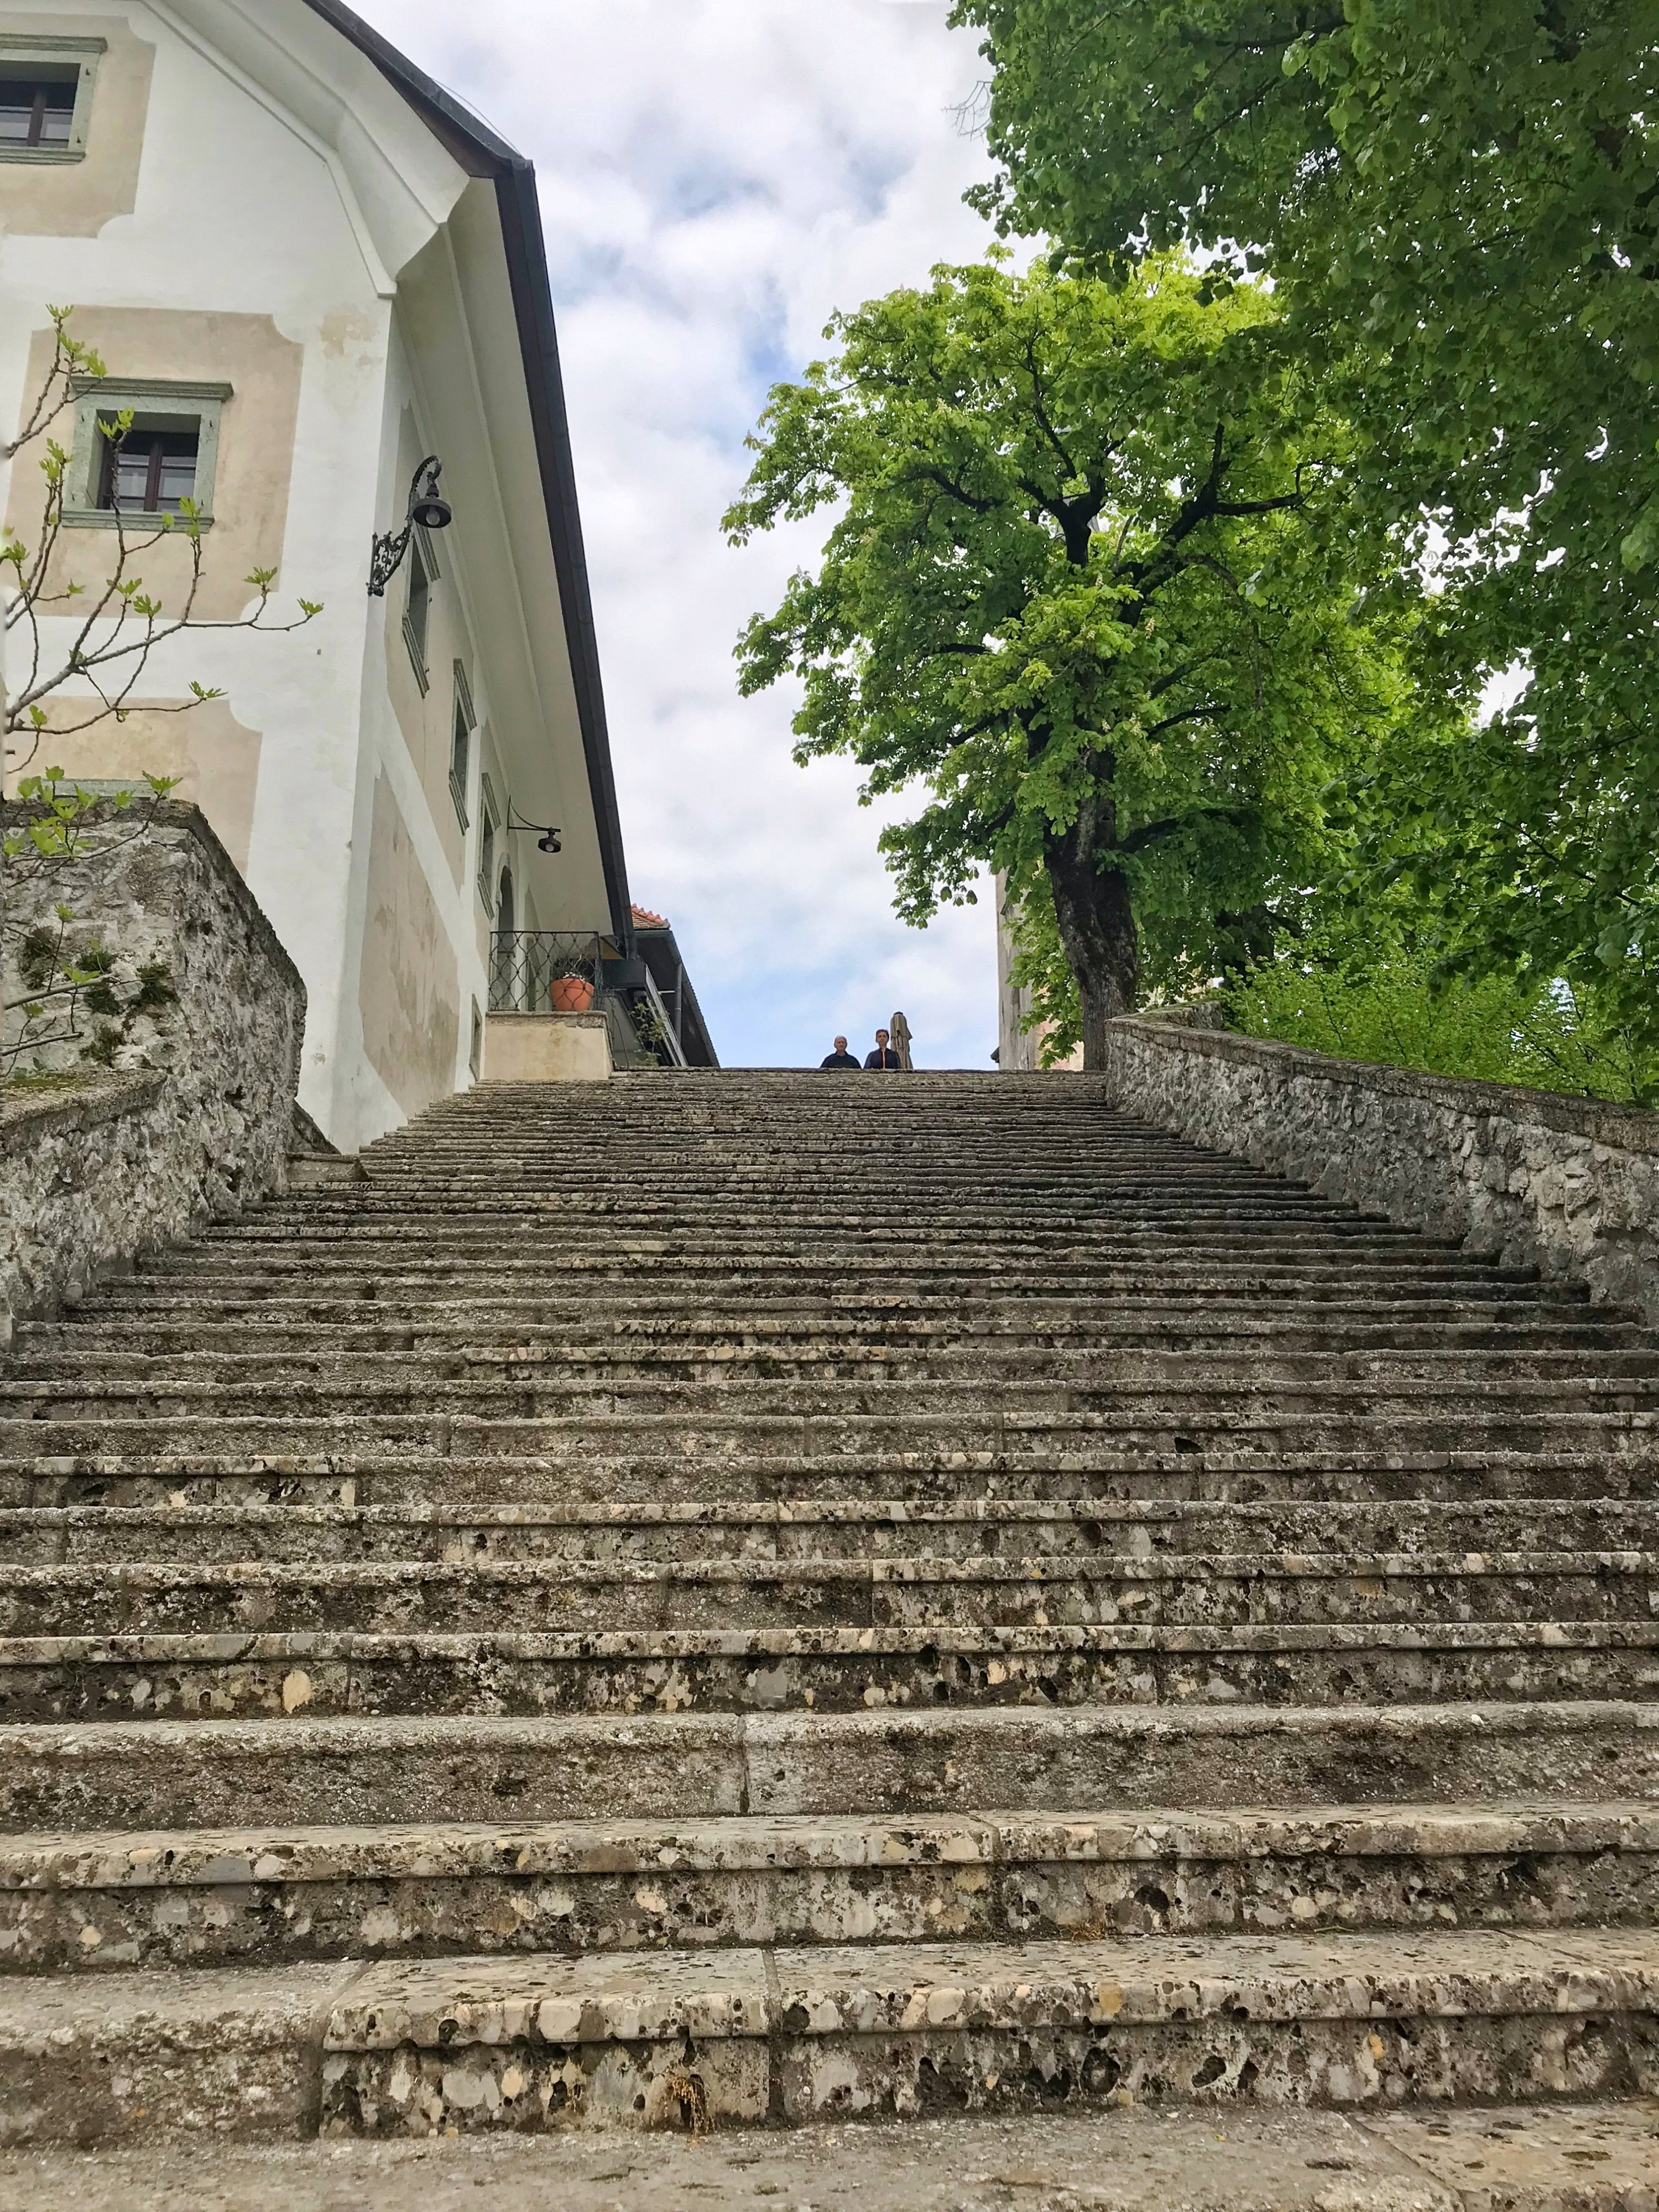 Tangga di pulau Bled, Slovenia.  (Foto oleh zge engelen)